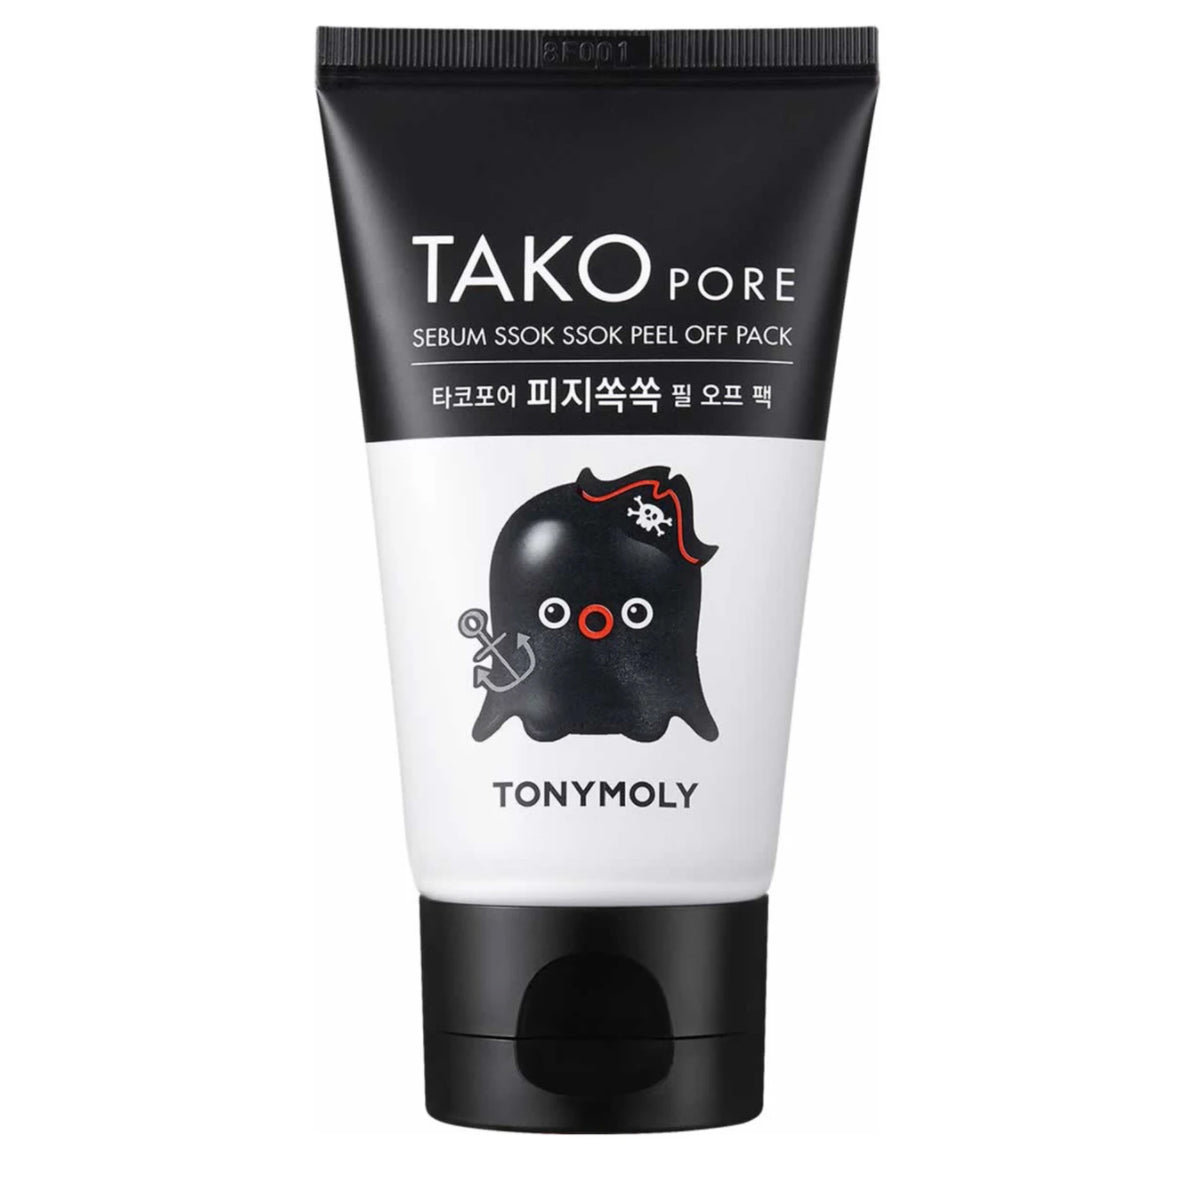 Tonymoly - Takopore Sebum Ssok Ssok Peel Off Pack - 60 ml